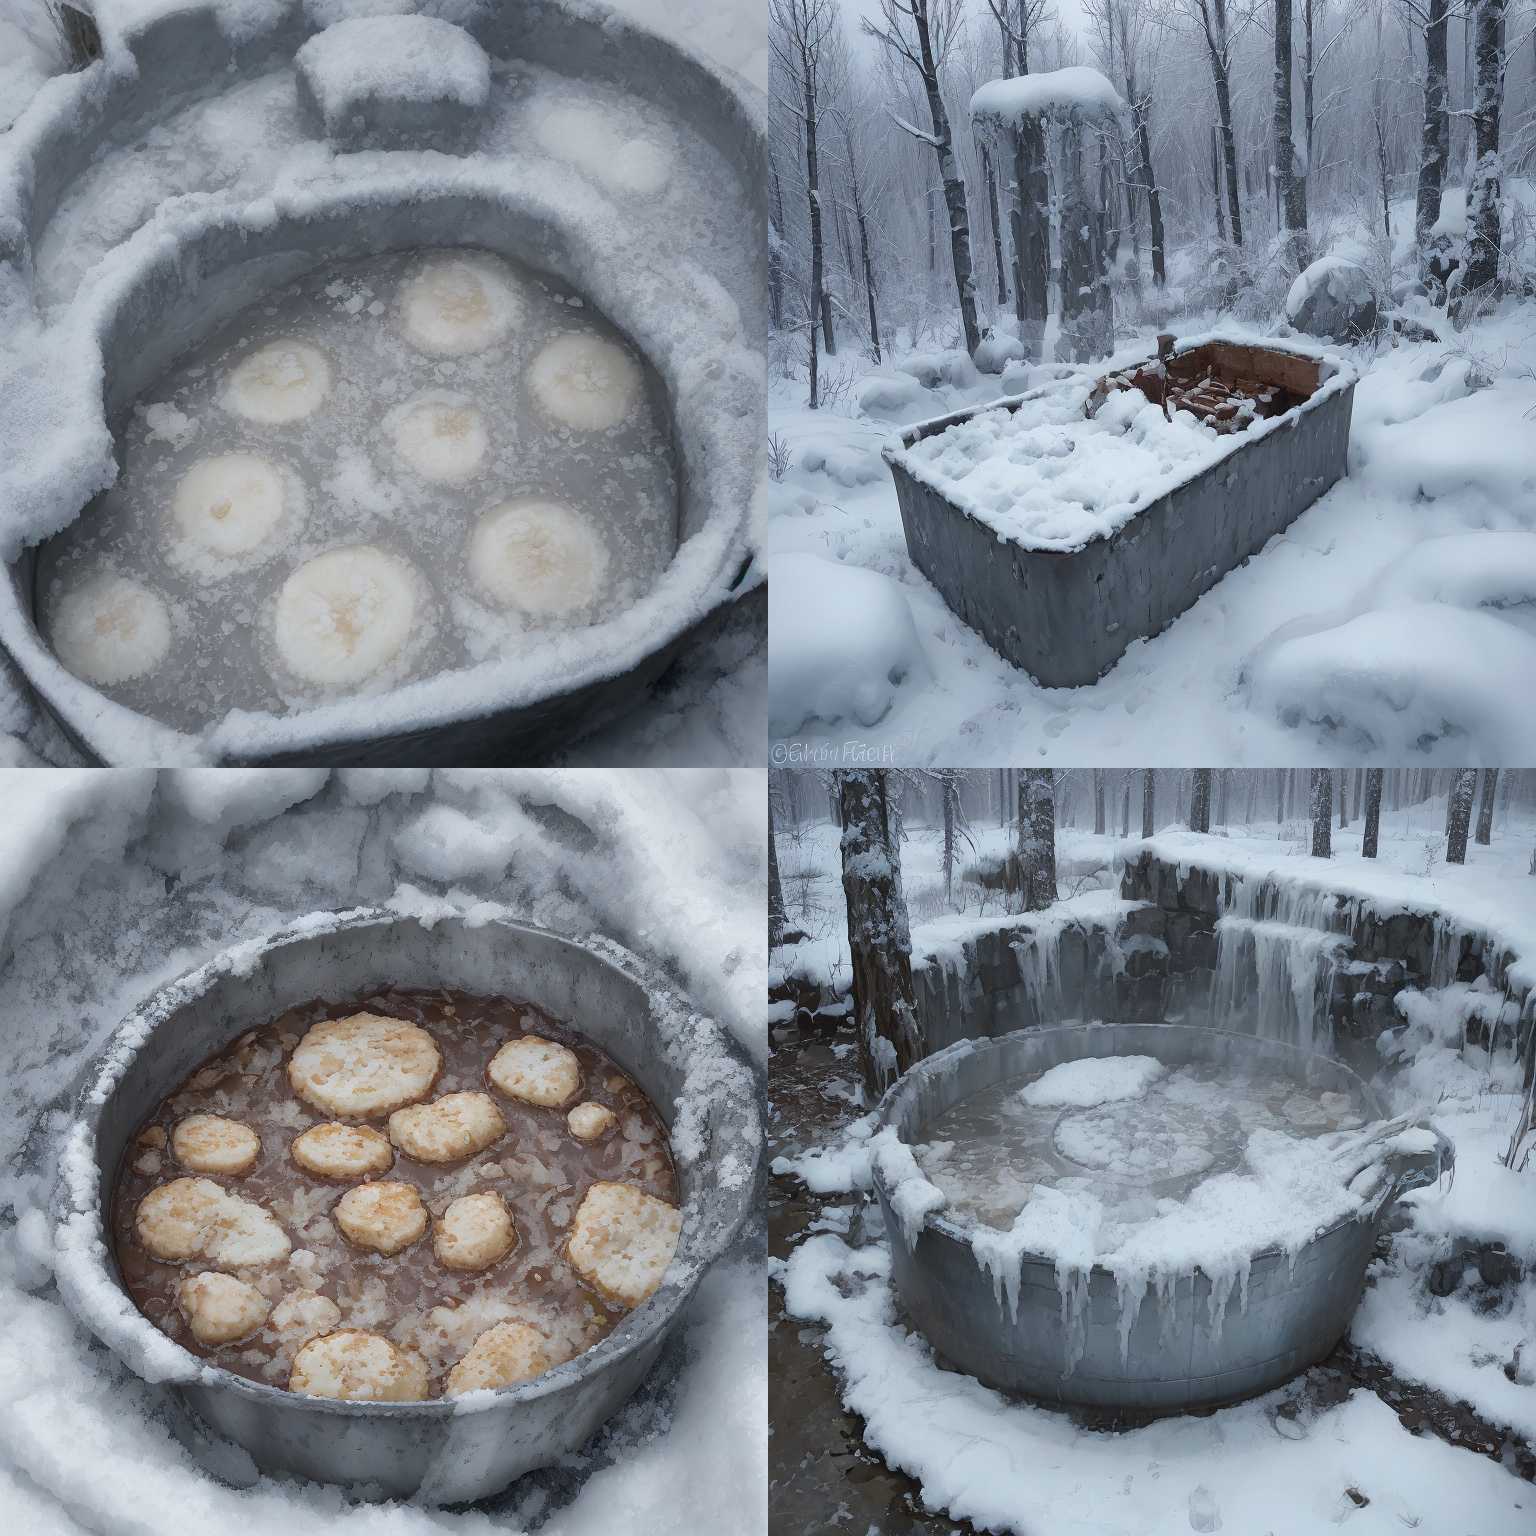 A cold pan